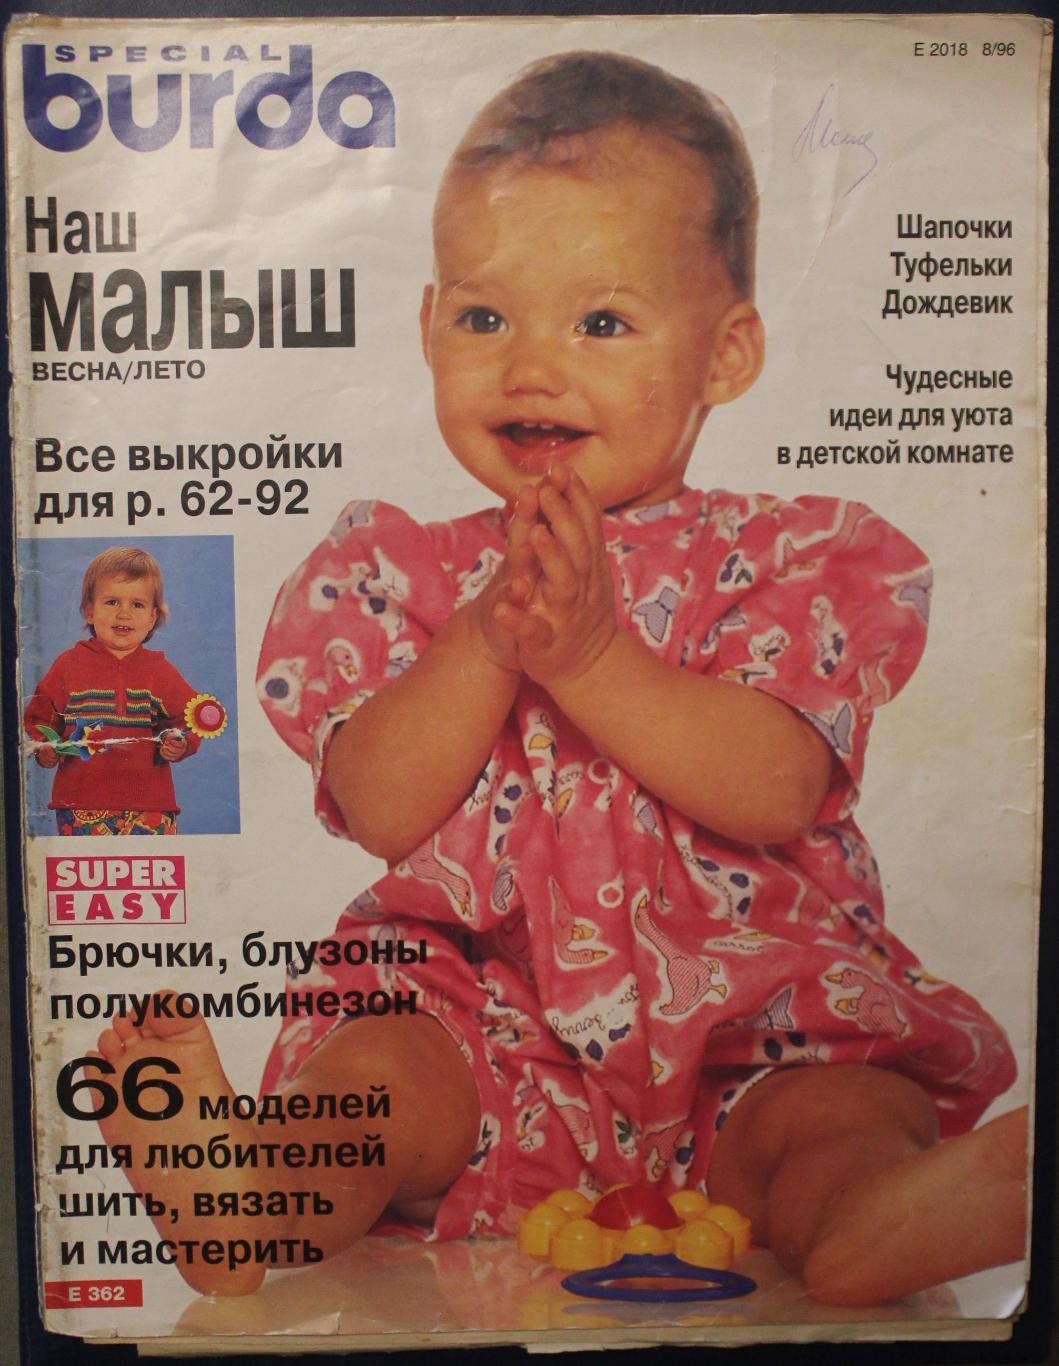 Журнал Бурда. Наш малыш весна/лето 1996